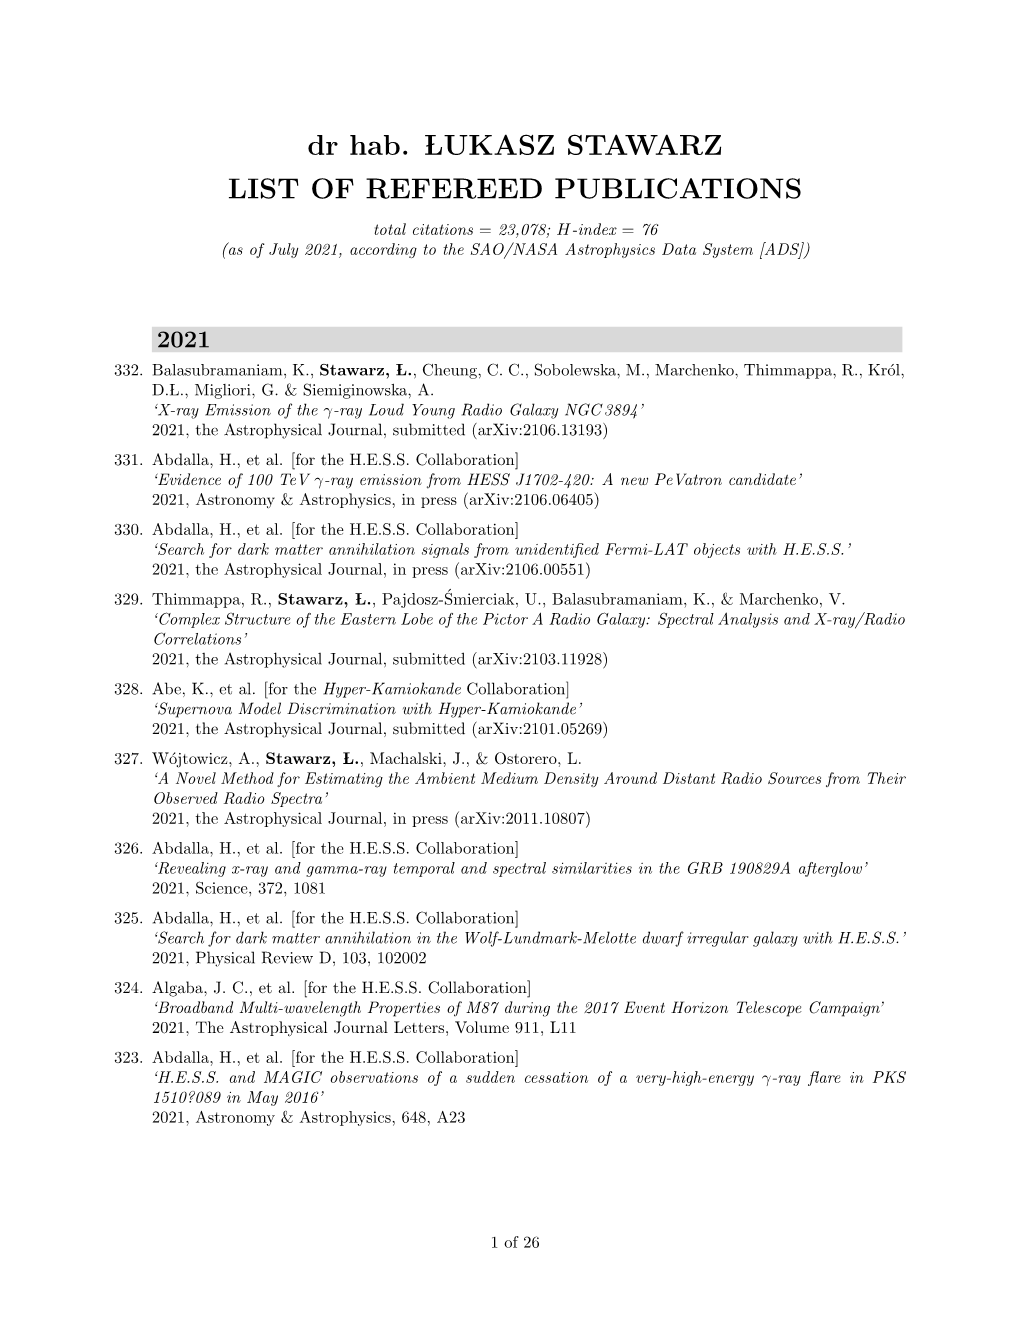 Dr Hab. LUKASZ STAWARZ LIST of REFEREED PUBLICATIONS